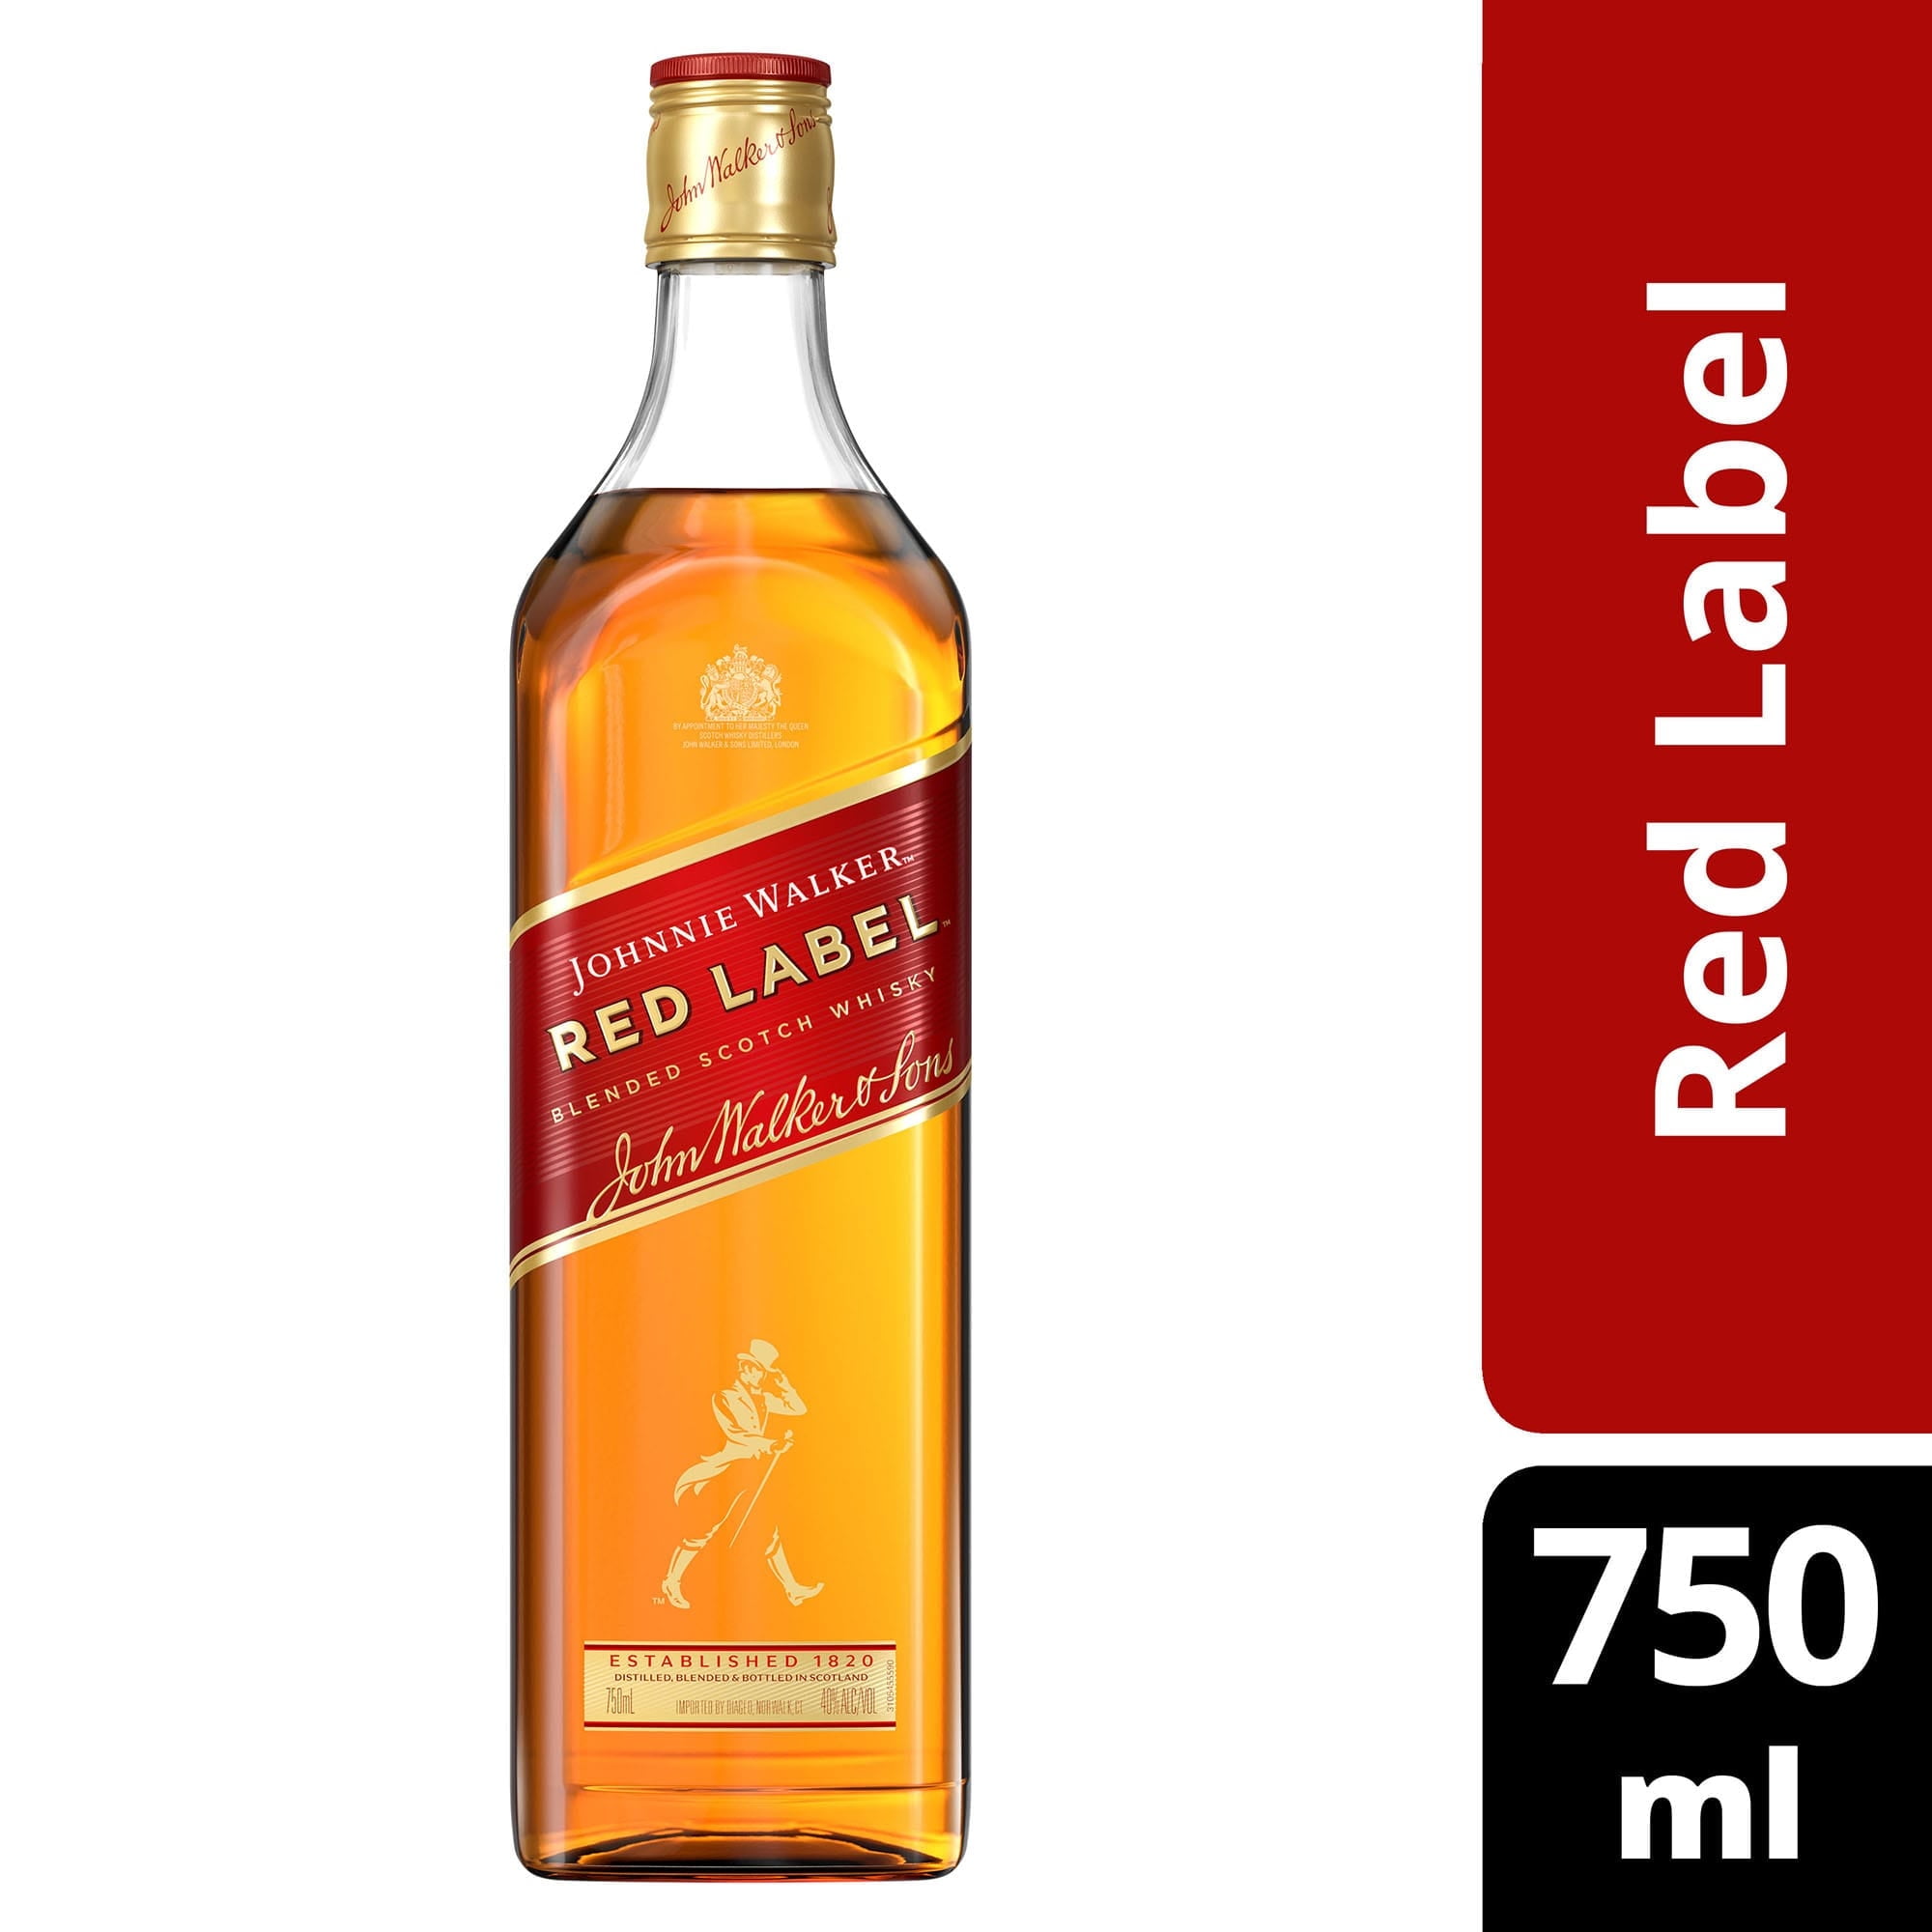 Walker ml, ABV Red Johnnie 750 40% Whisky, Blended Scotch Label